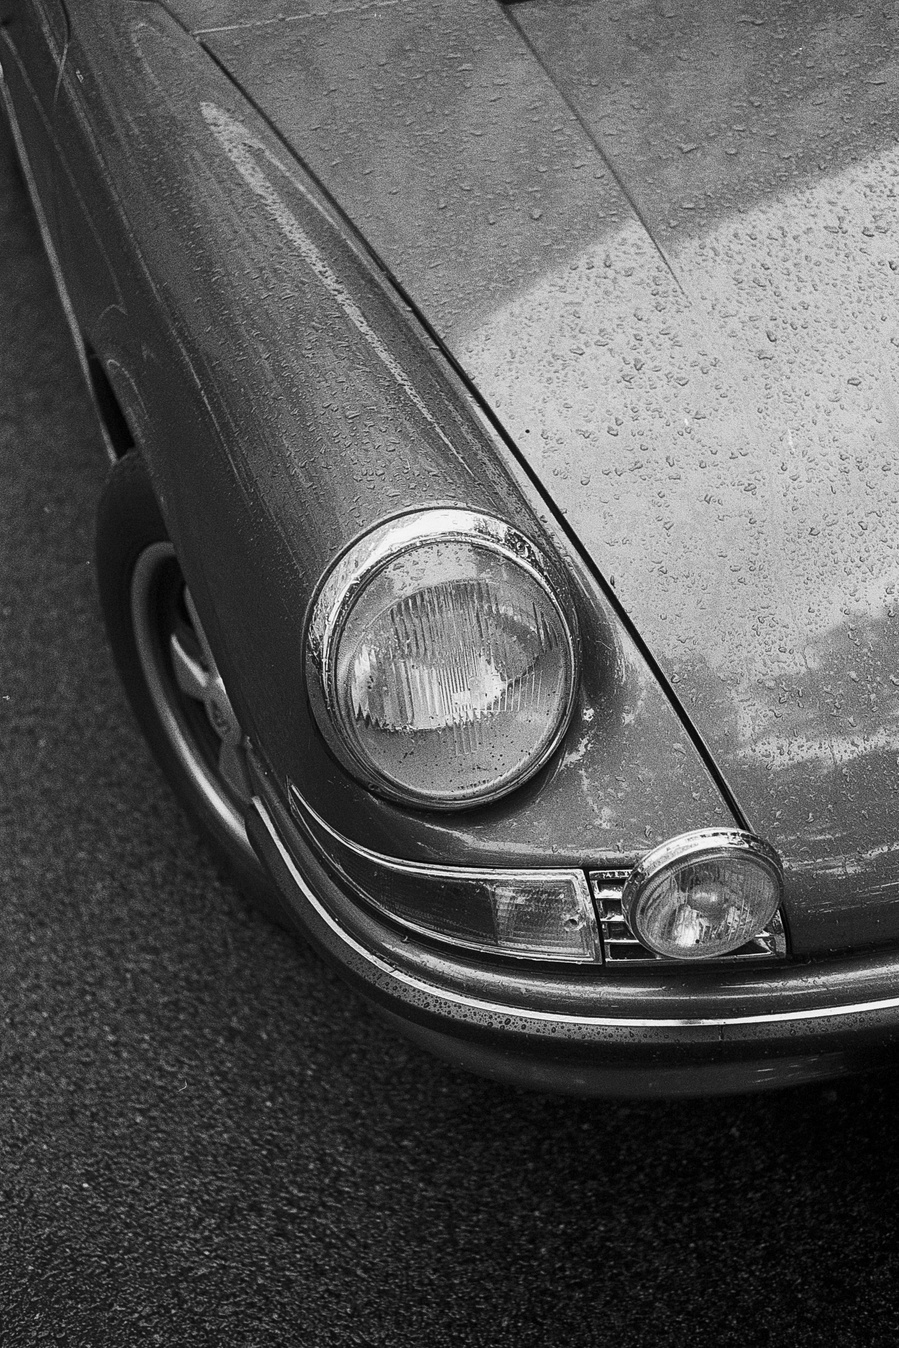 Black and white photograph of a classic Porsche headlight